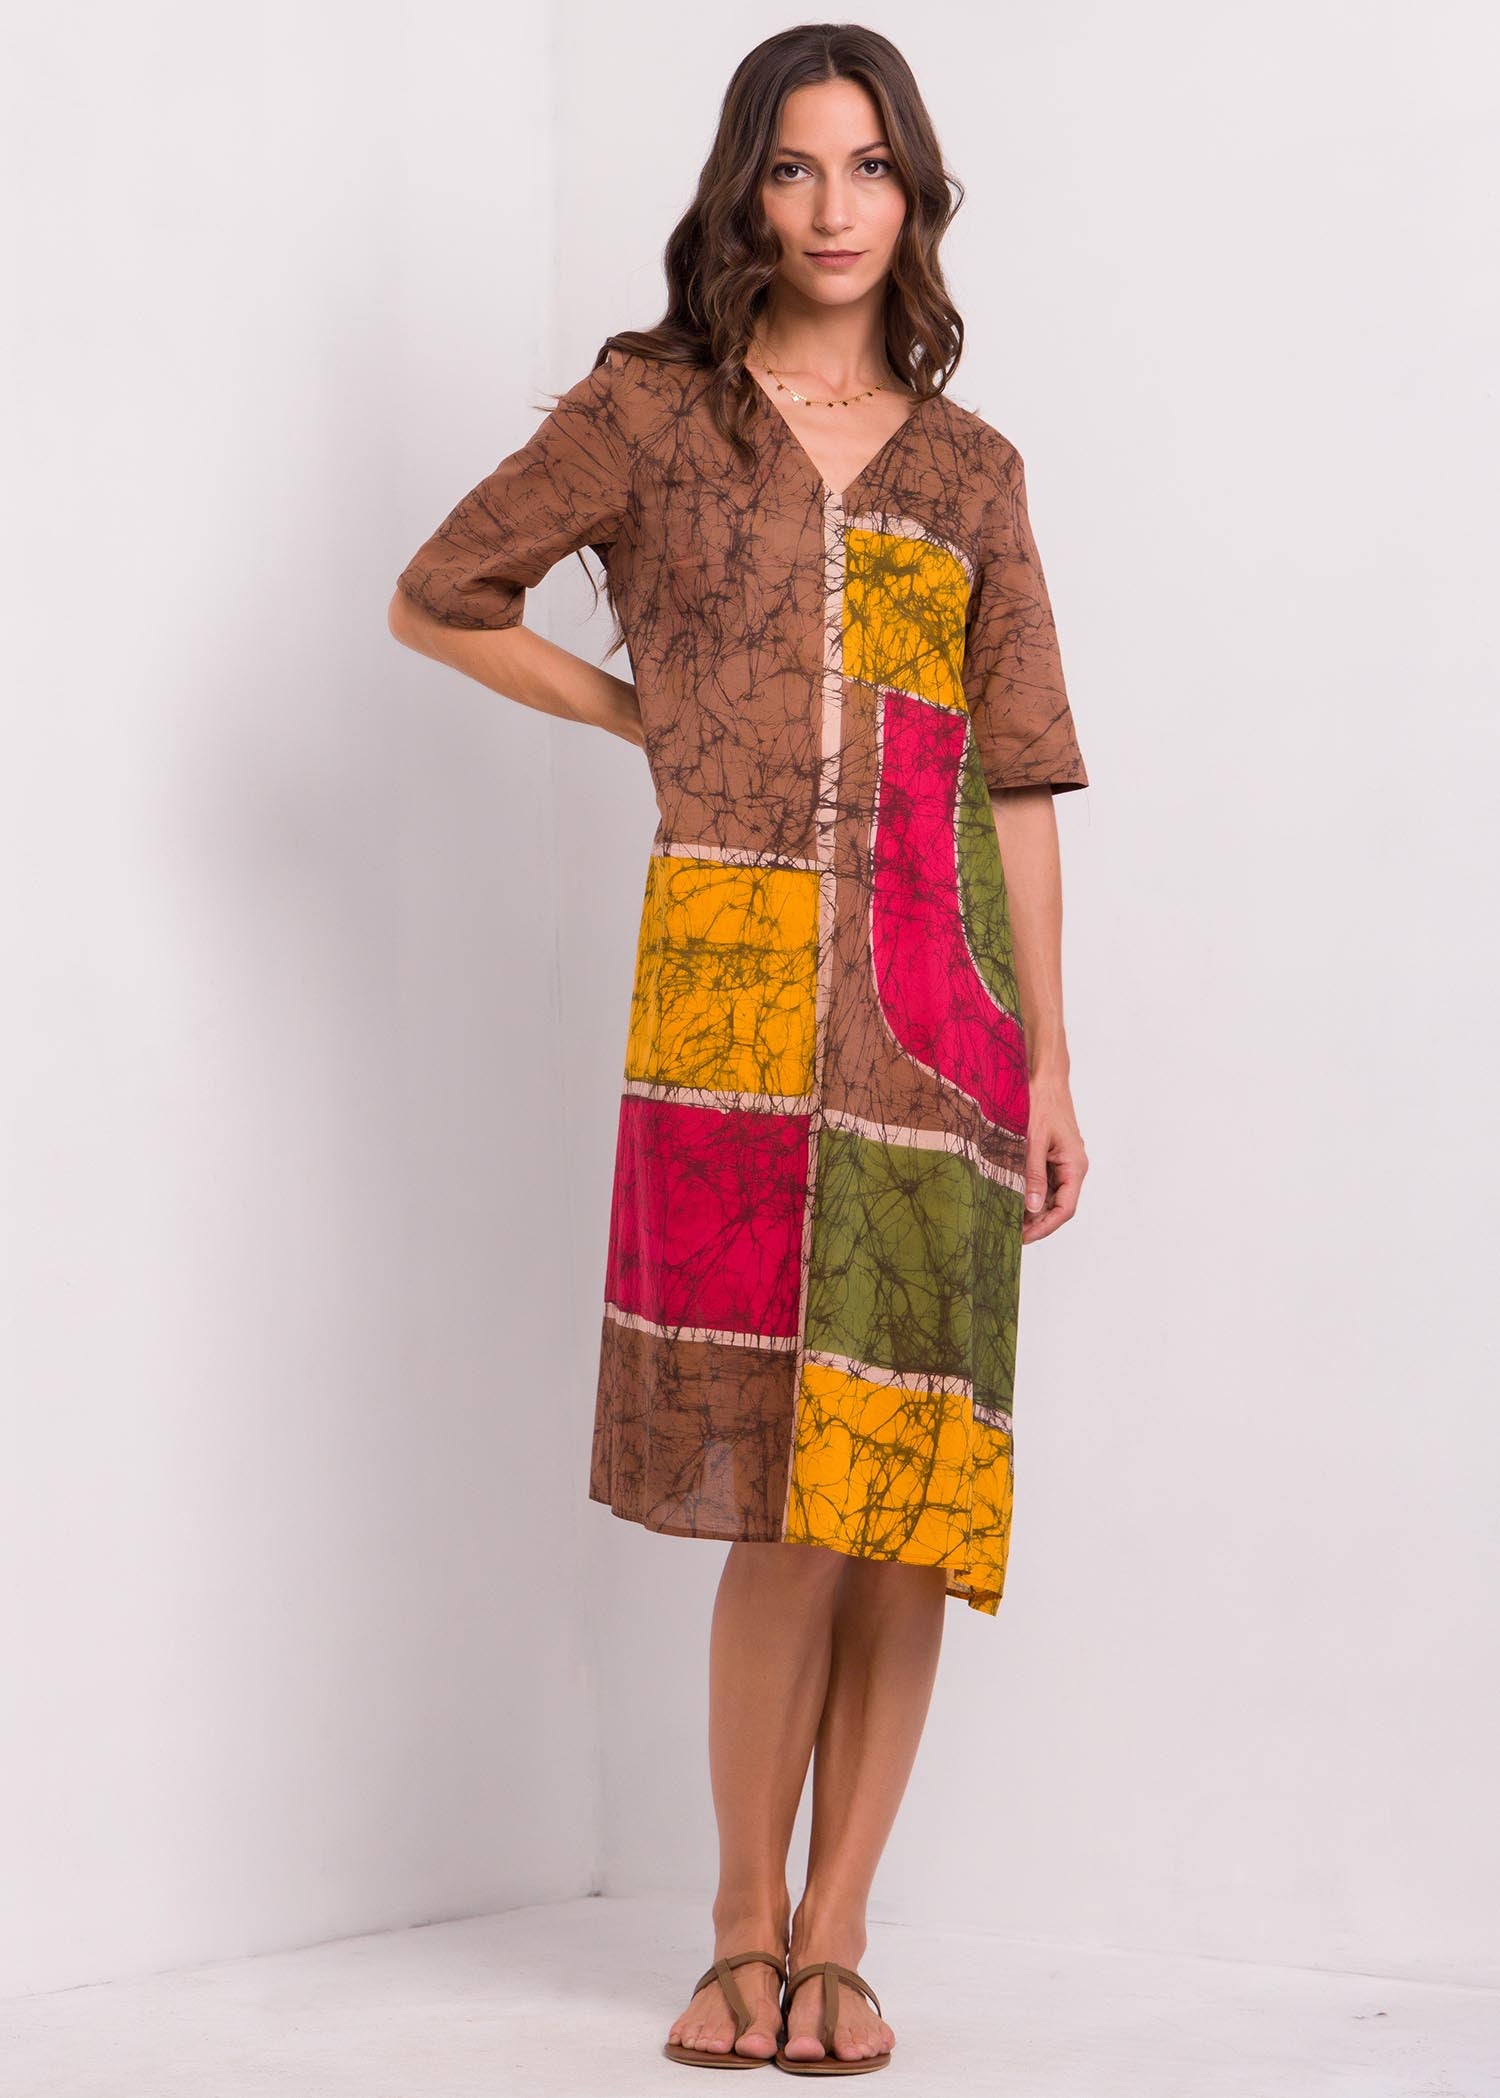 Geomatric Shapes Detailed Batik Dress